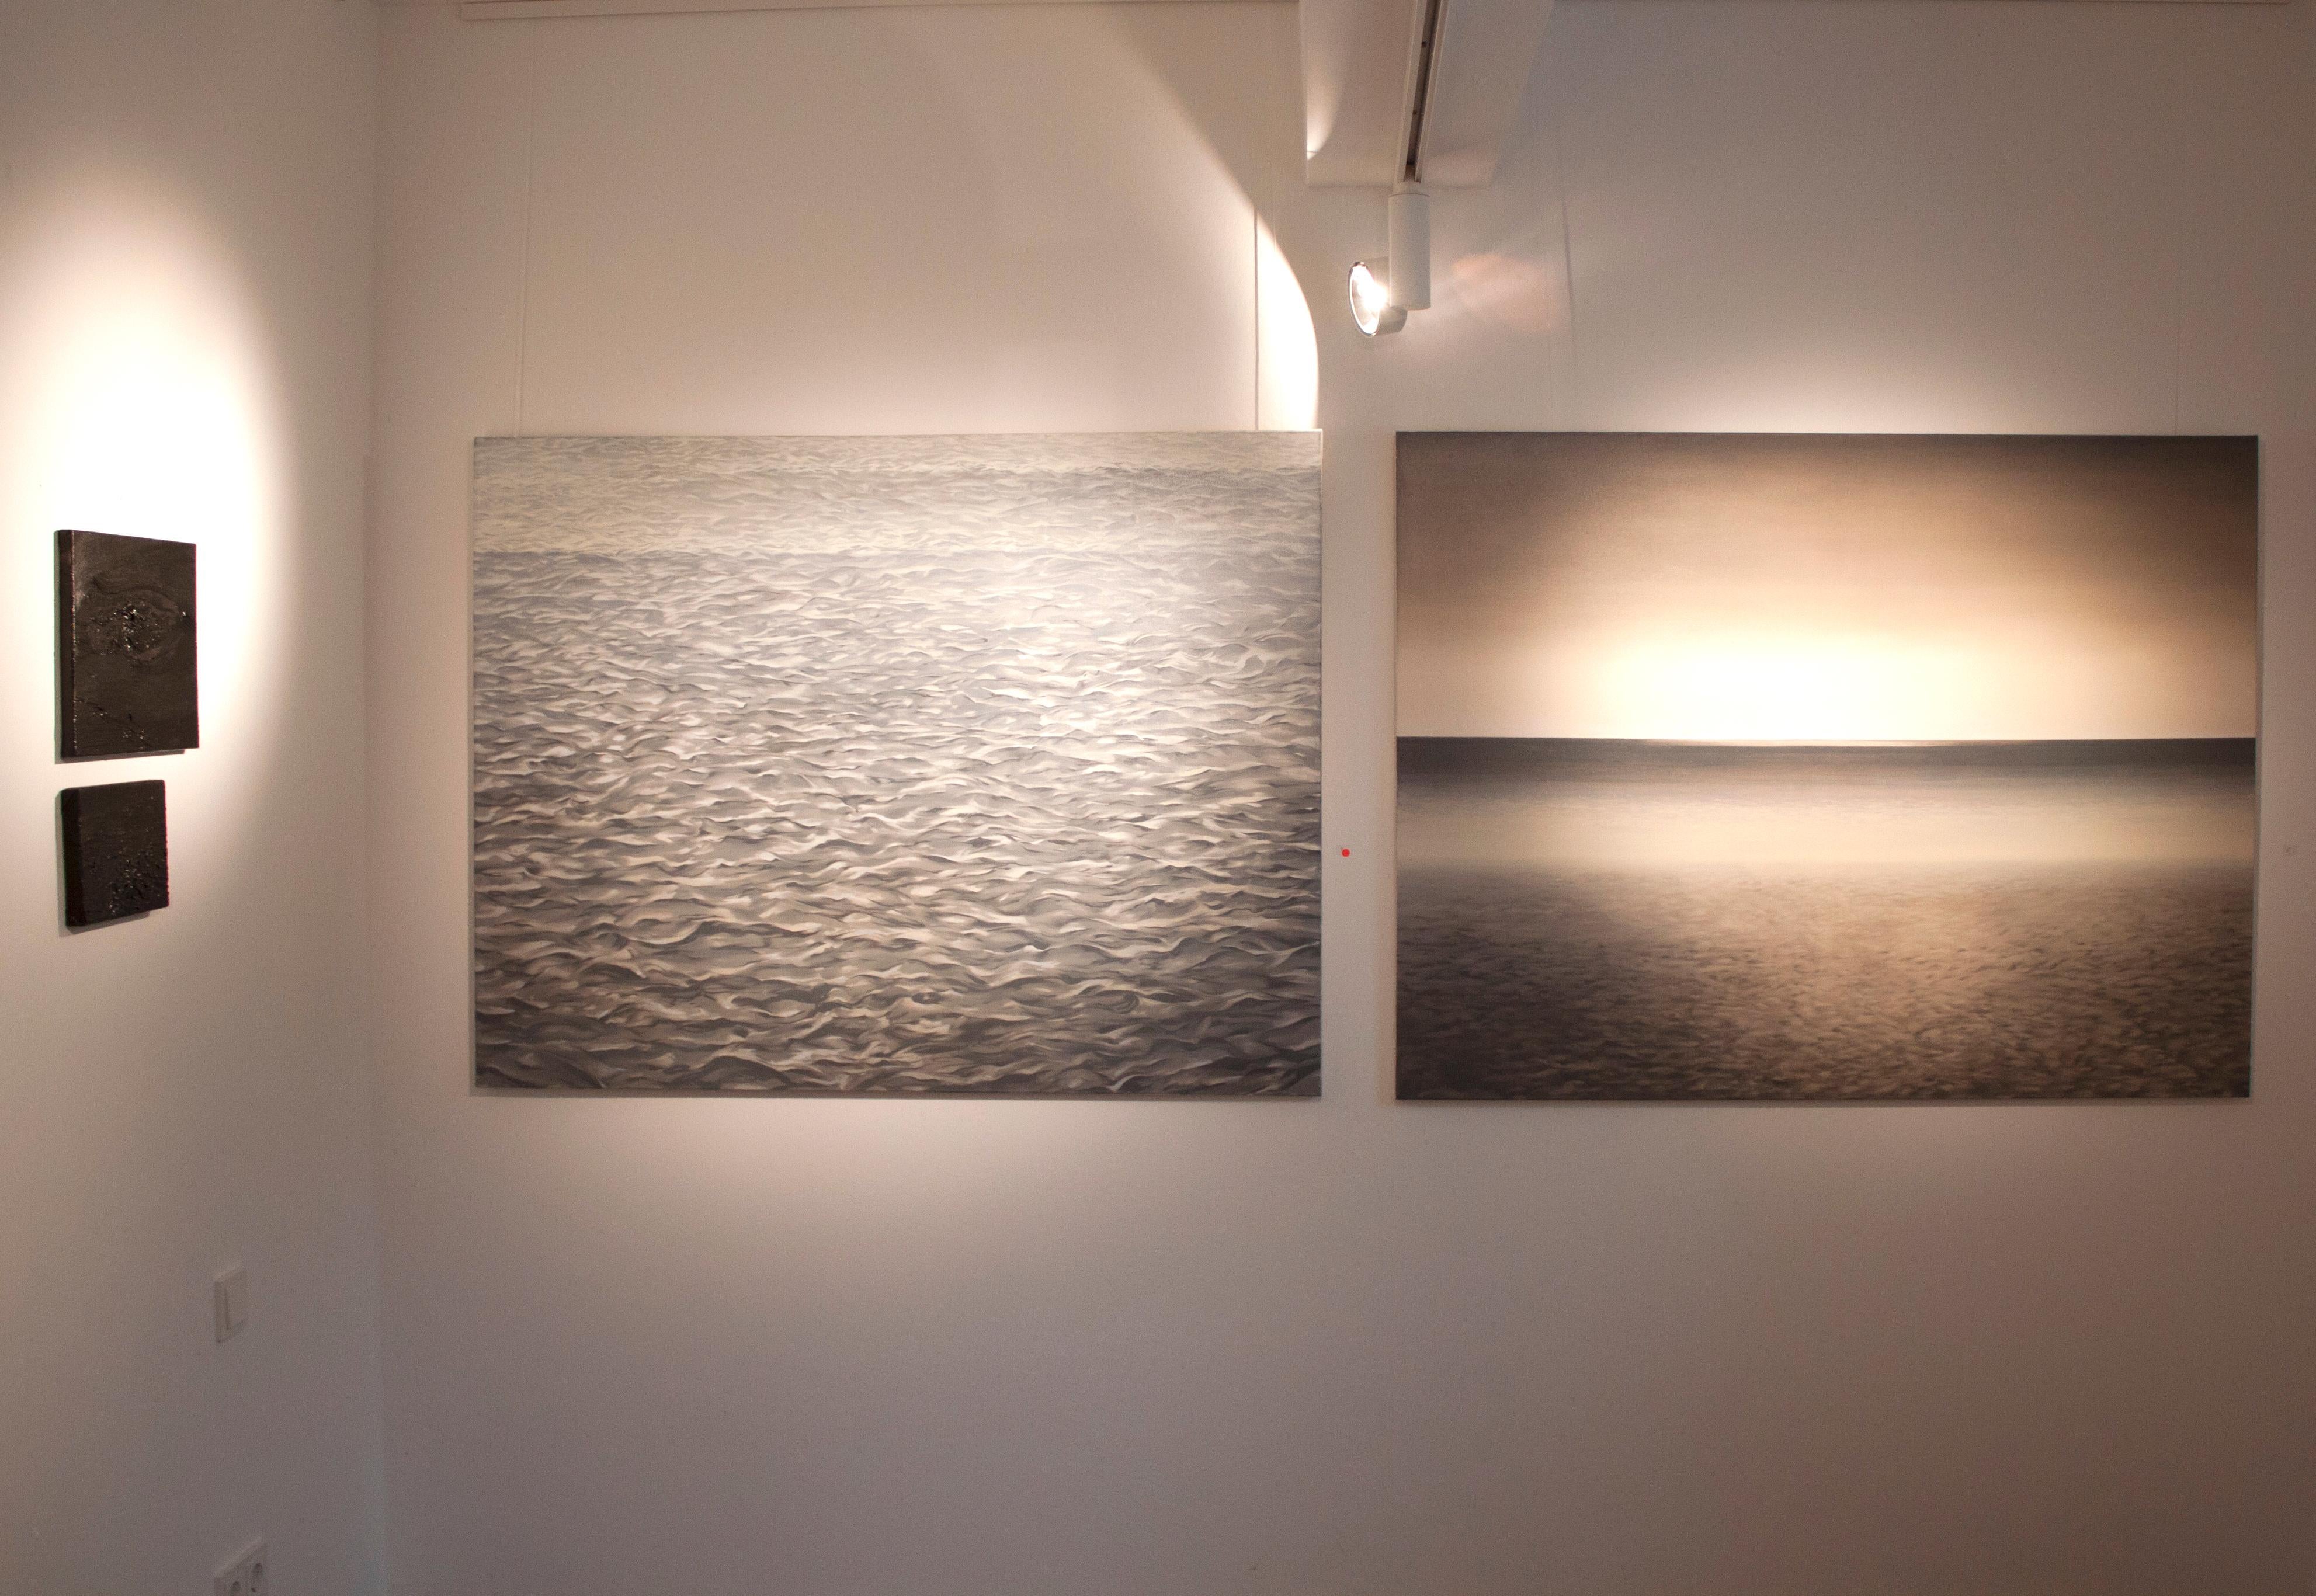 La mer, la vibration - Nature contemporaine, paysage, paysage marin, peinture à l'eau - Contemporain Painting par Justyna Smoleń